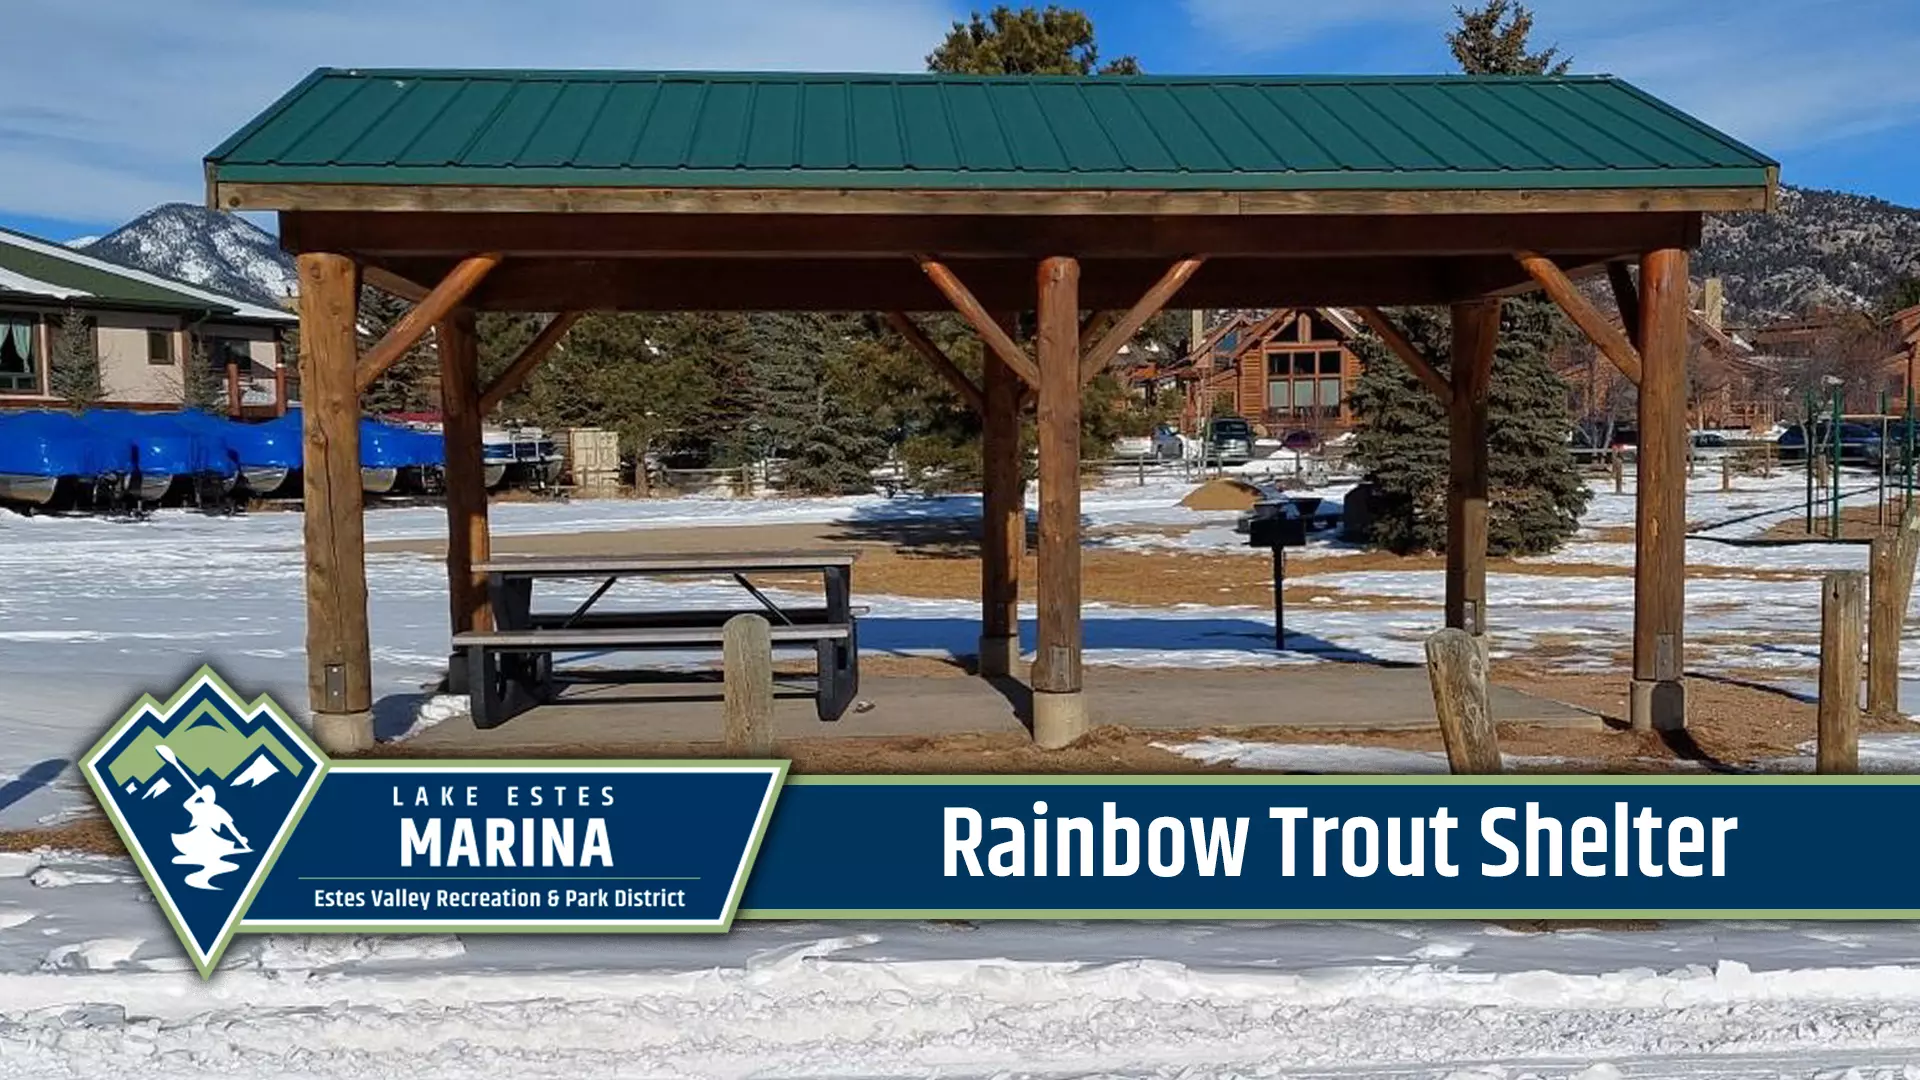 Rainbow Trout Shelter at Lake Estes